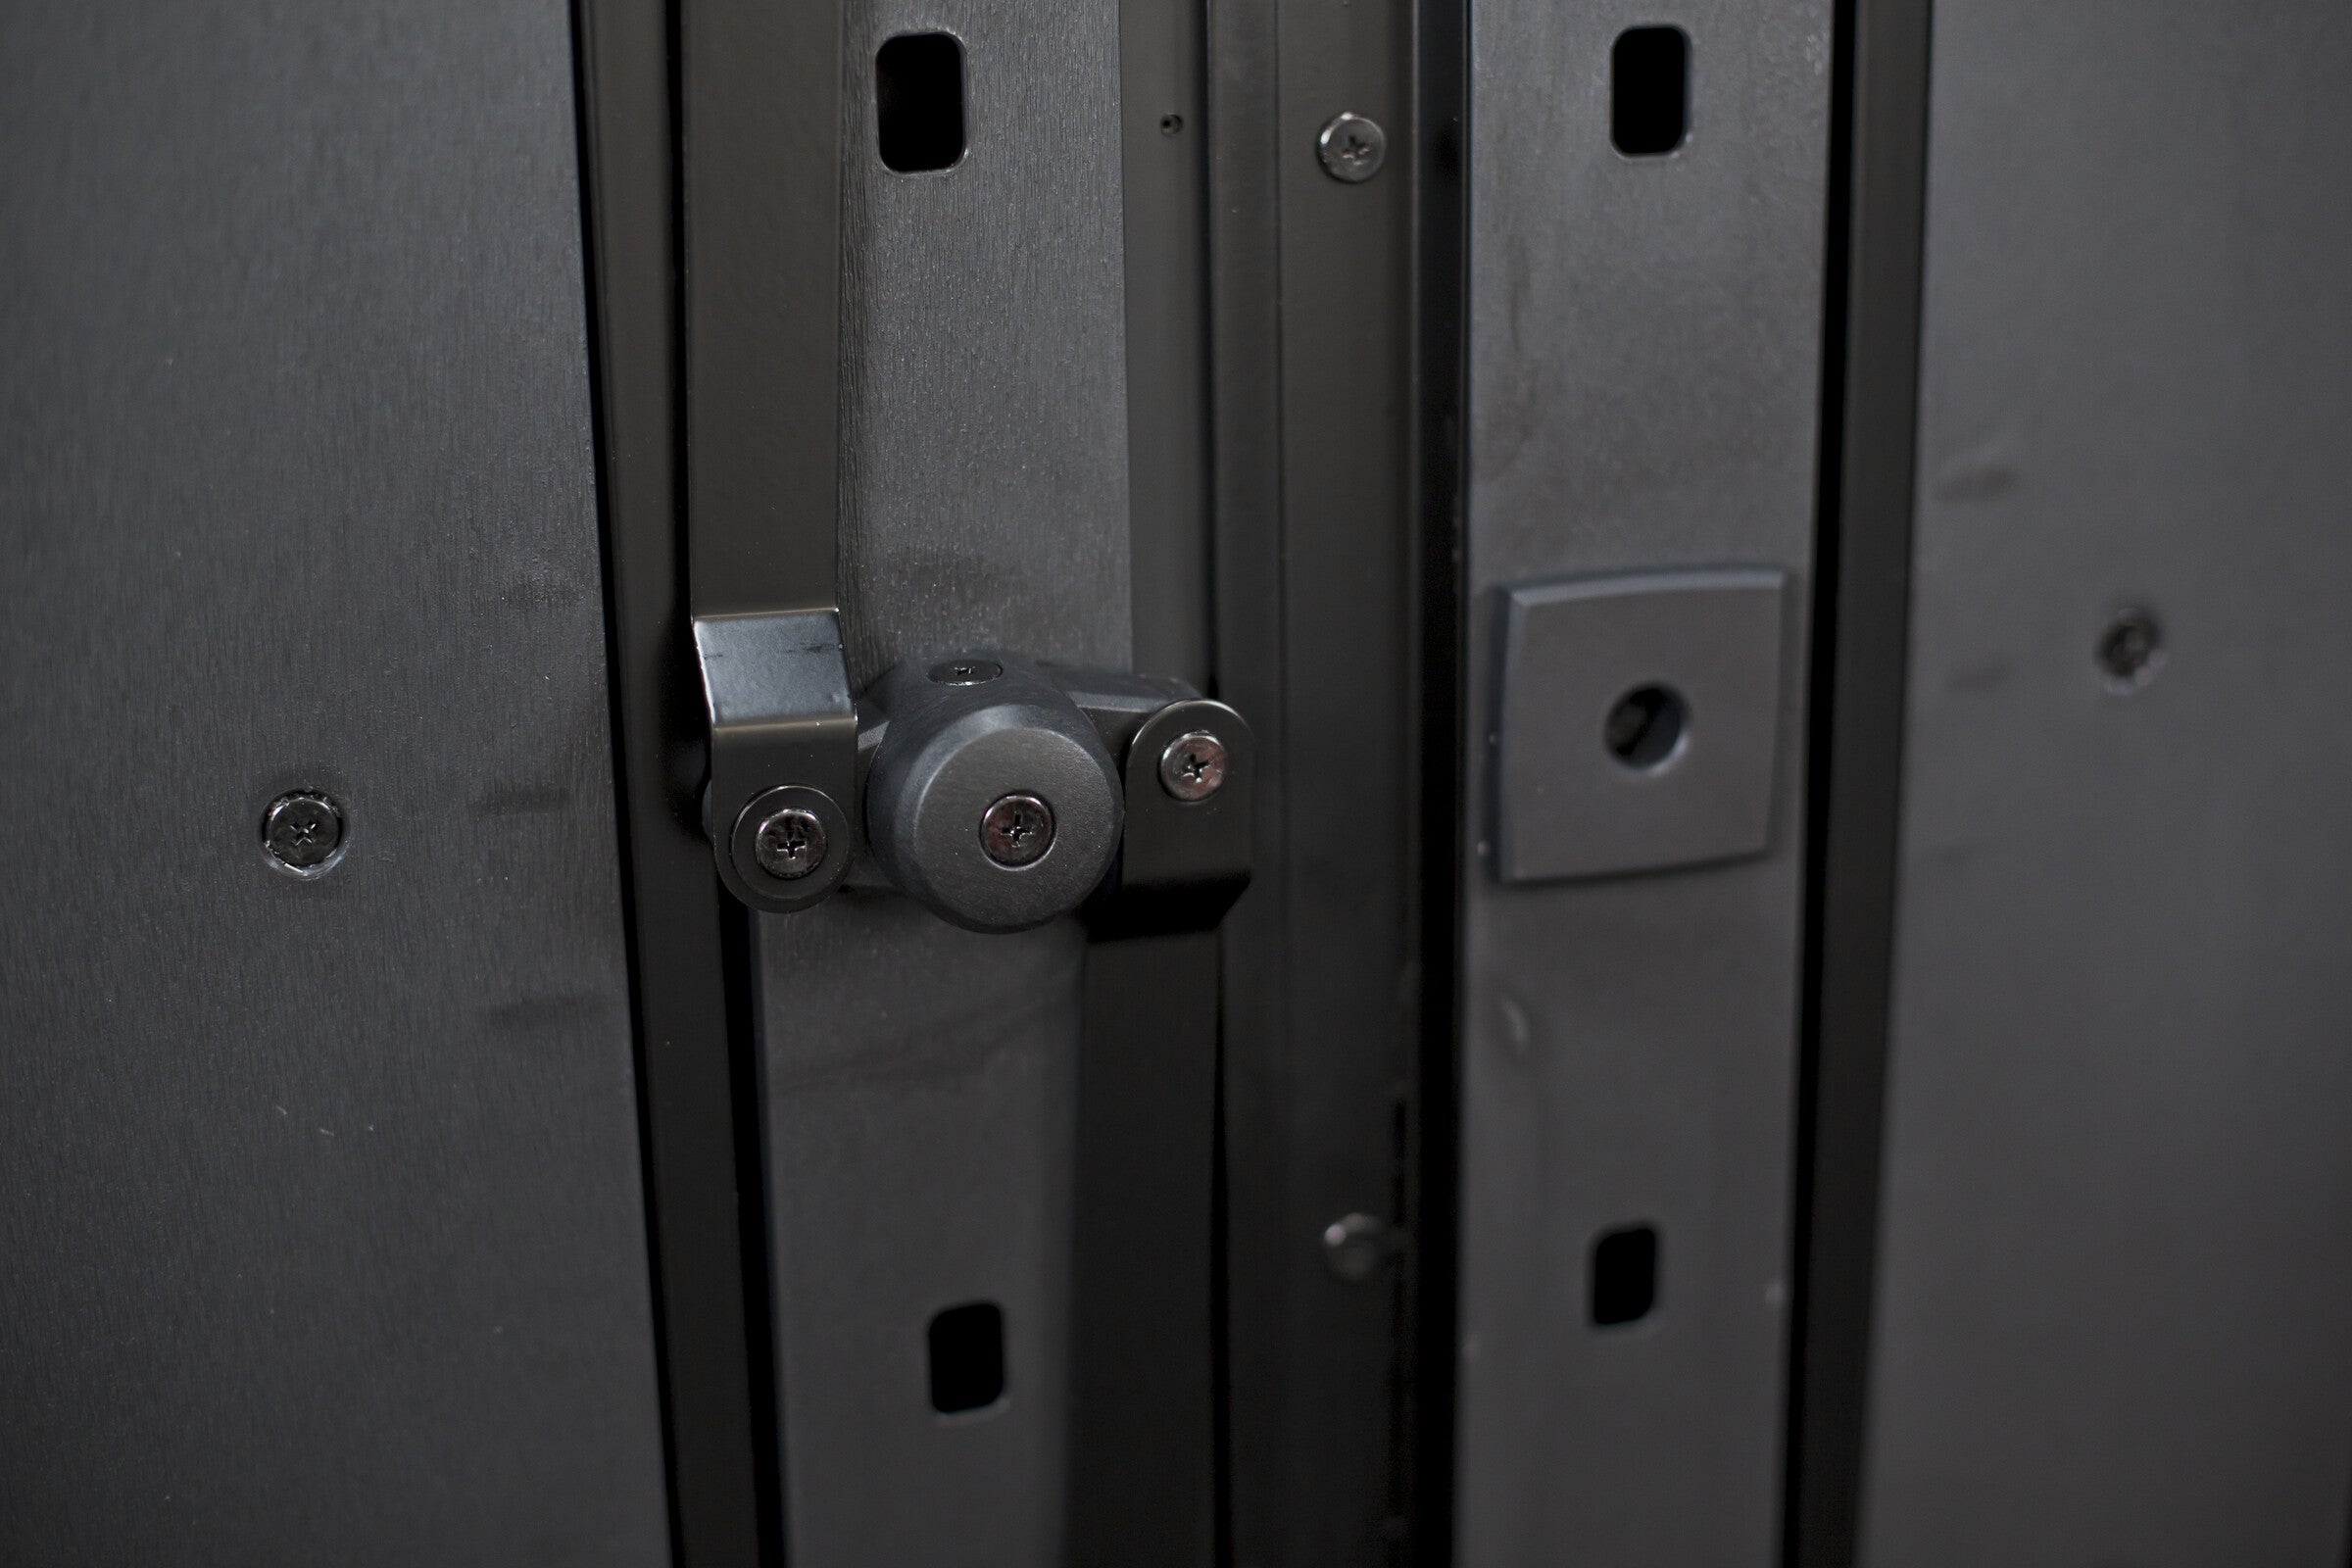 Locking mechanism on the Keter Oakland sheds